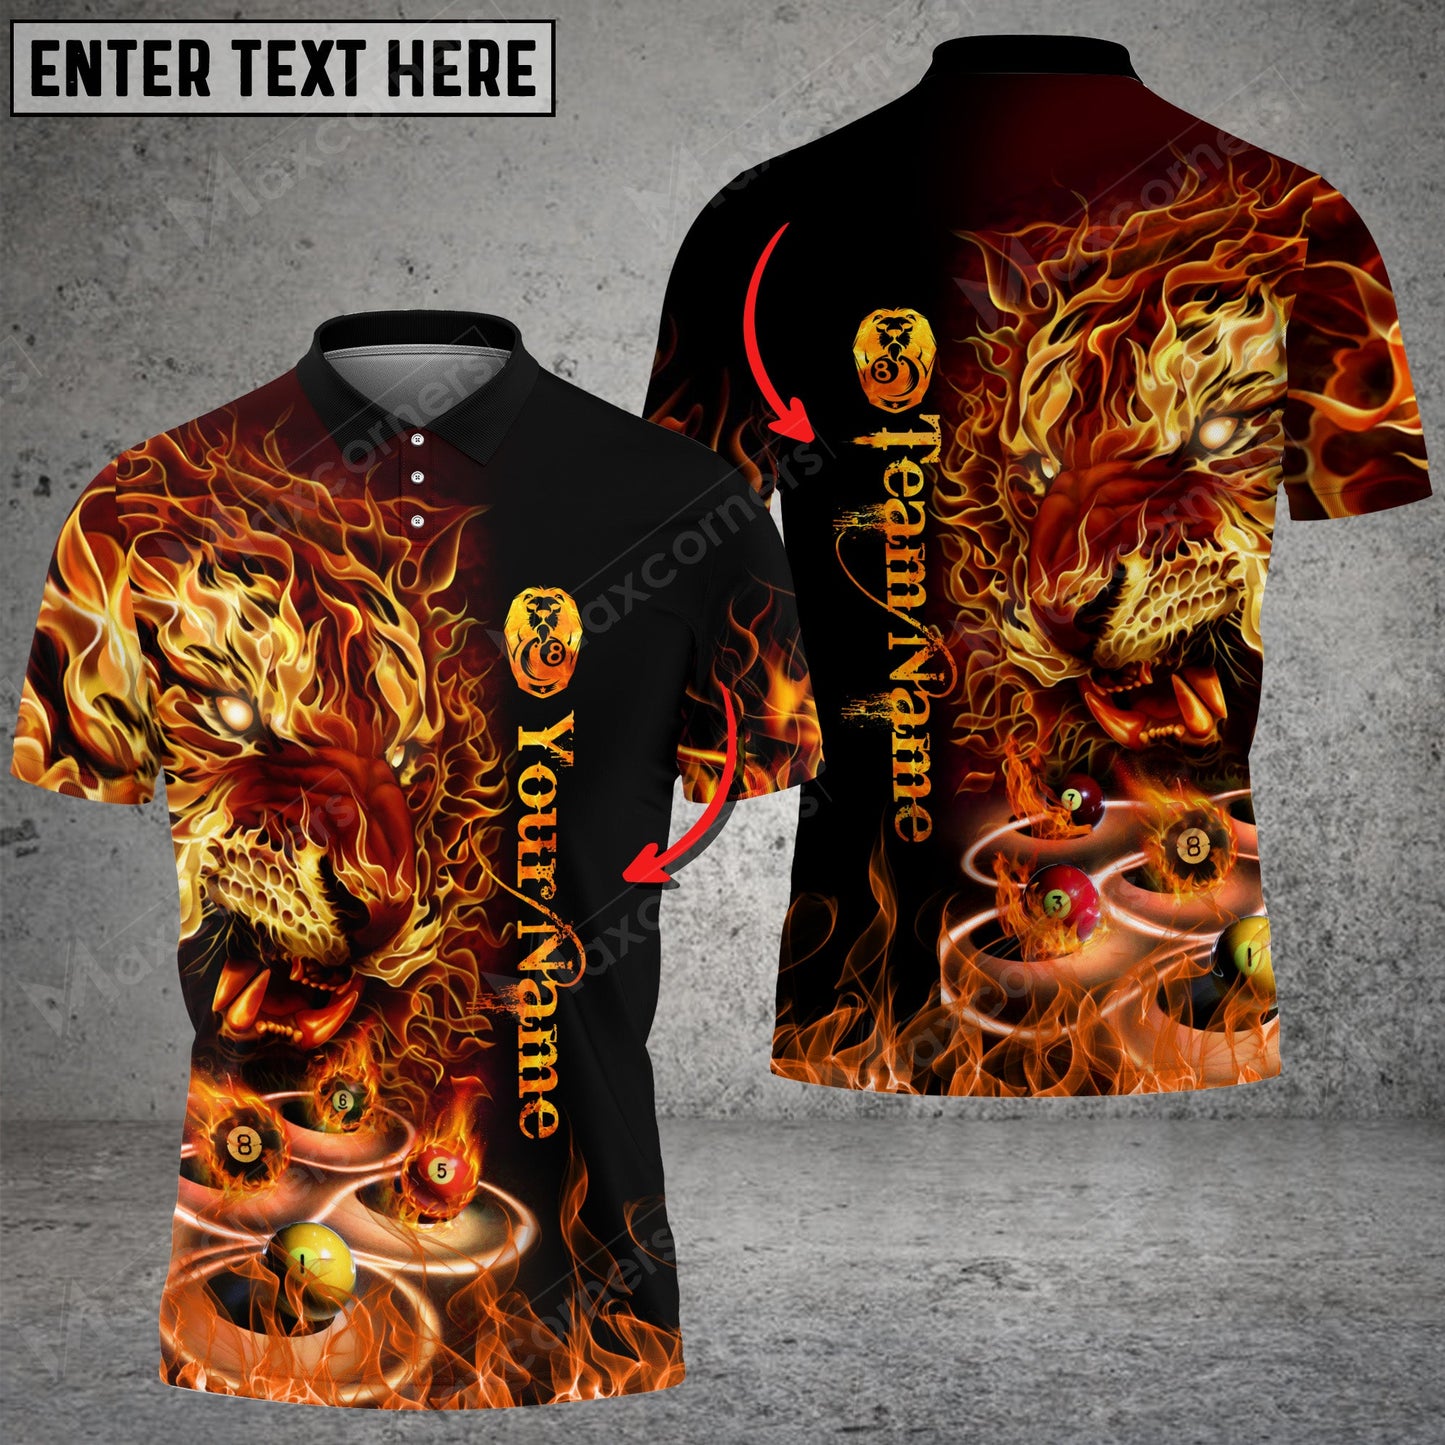 Lasfour Billiards Fire Lion King Personalized 3D Shirt BIA0357